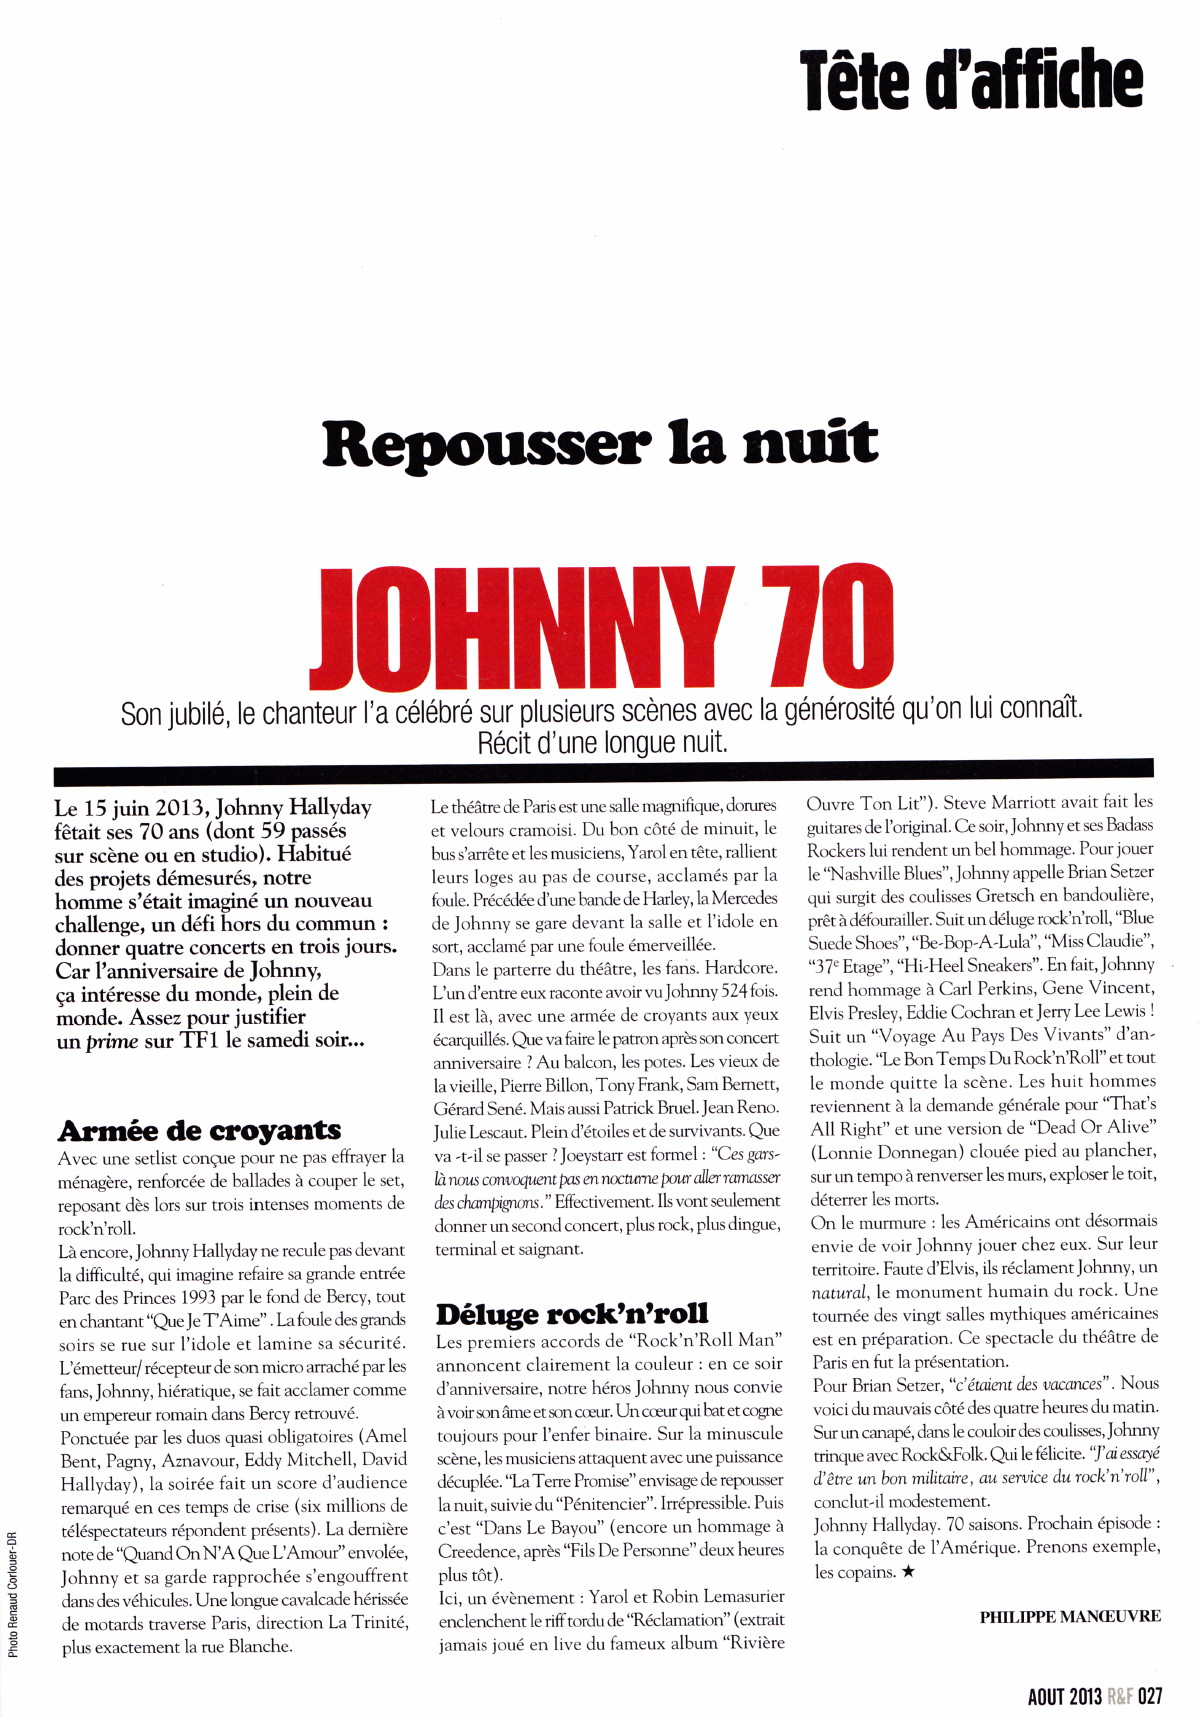 "JOHNNY 70" par PHILIPPE MANOEUVRE dans "ROCK AND FOLK" n°552 (août 2013) 13071306552615789311378407